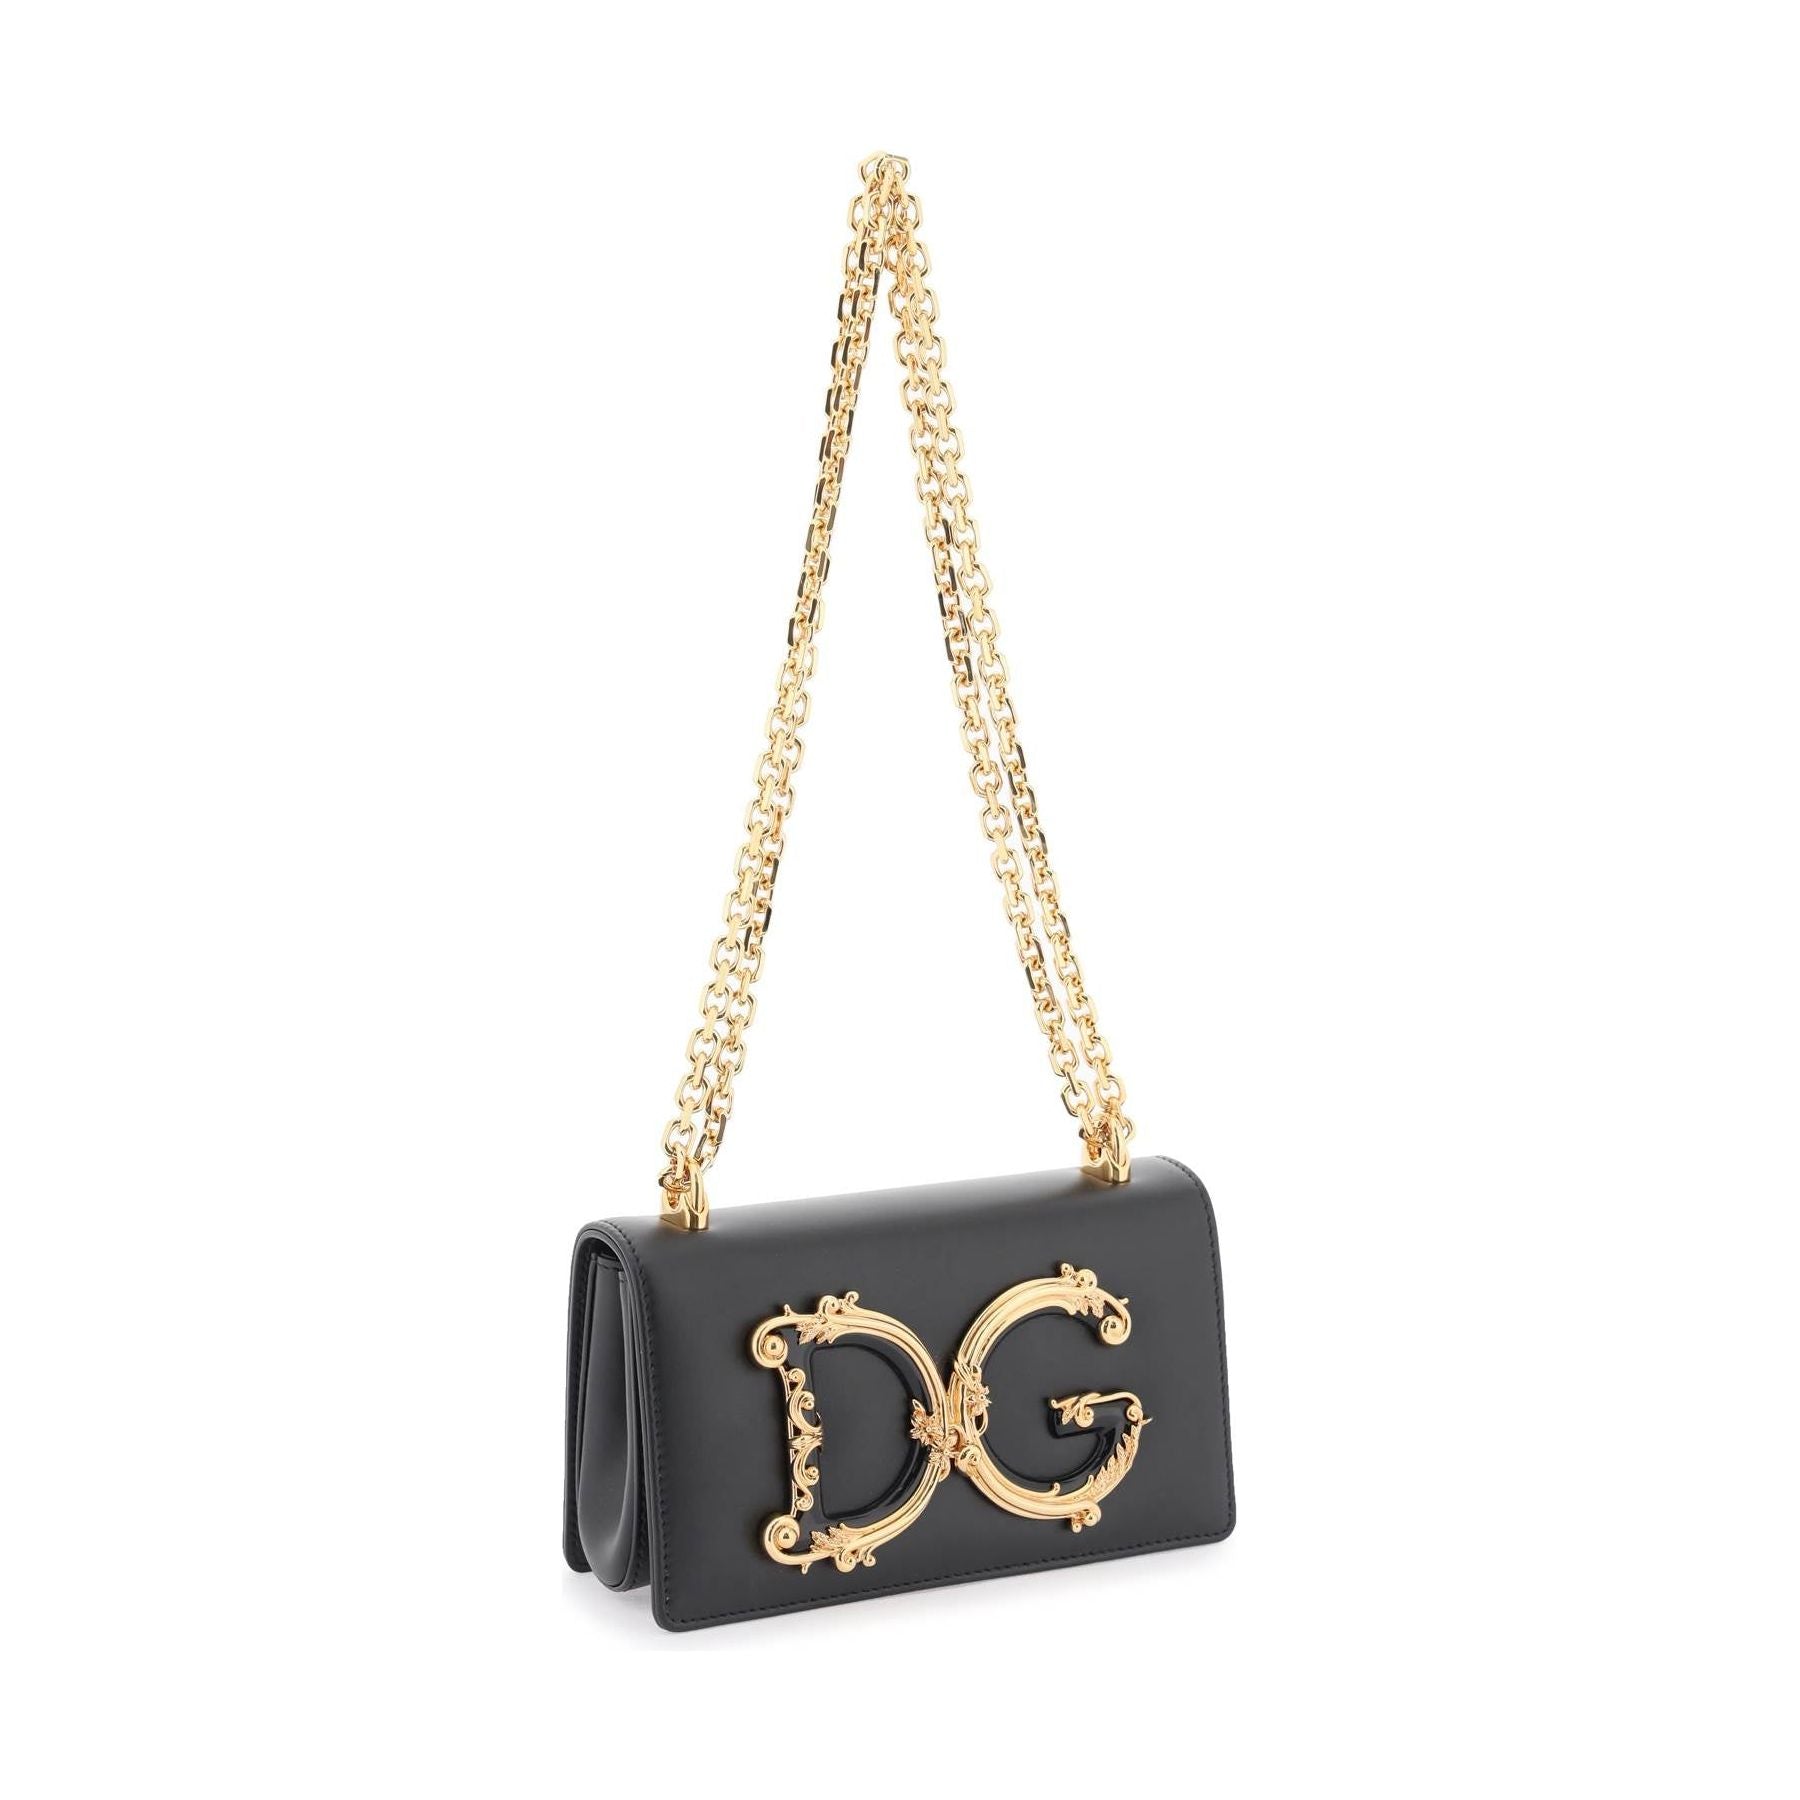 DG Girls Phone Bag